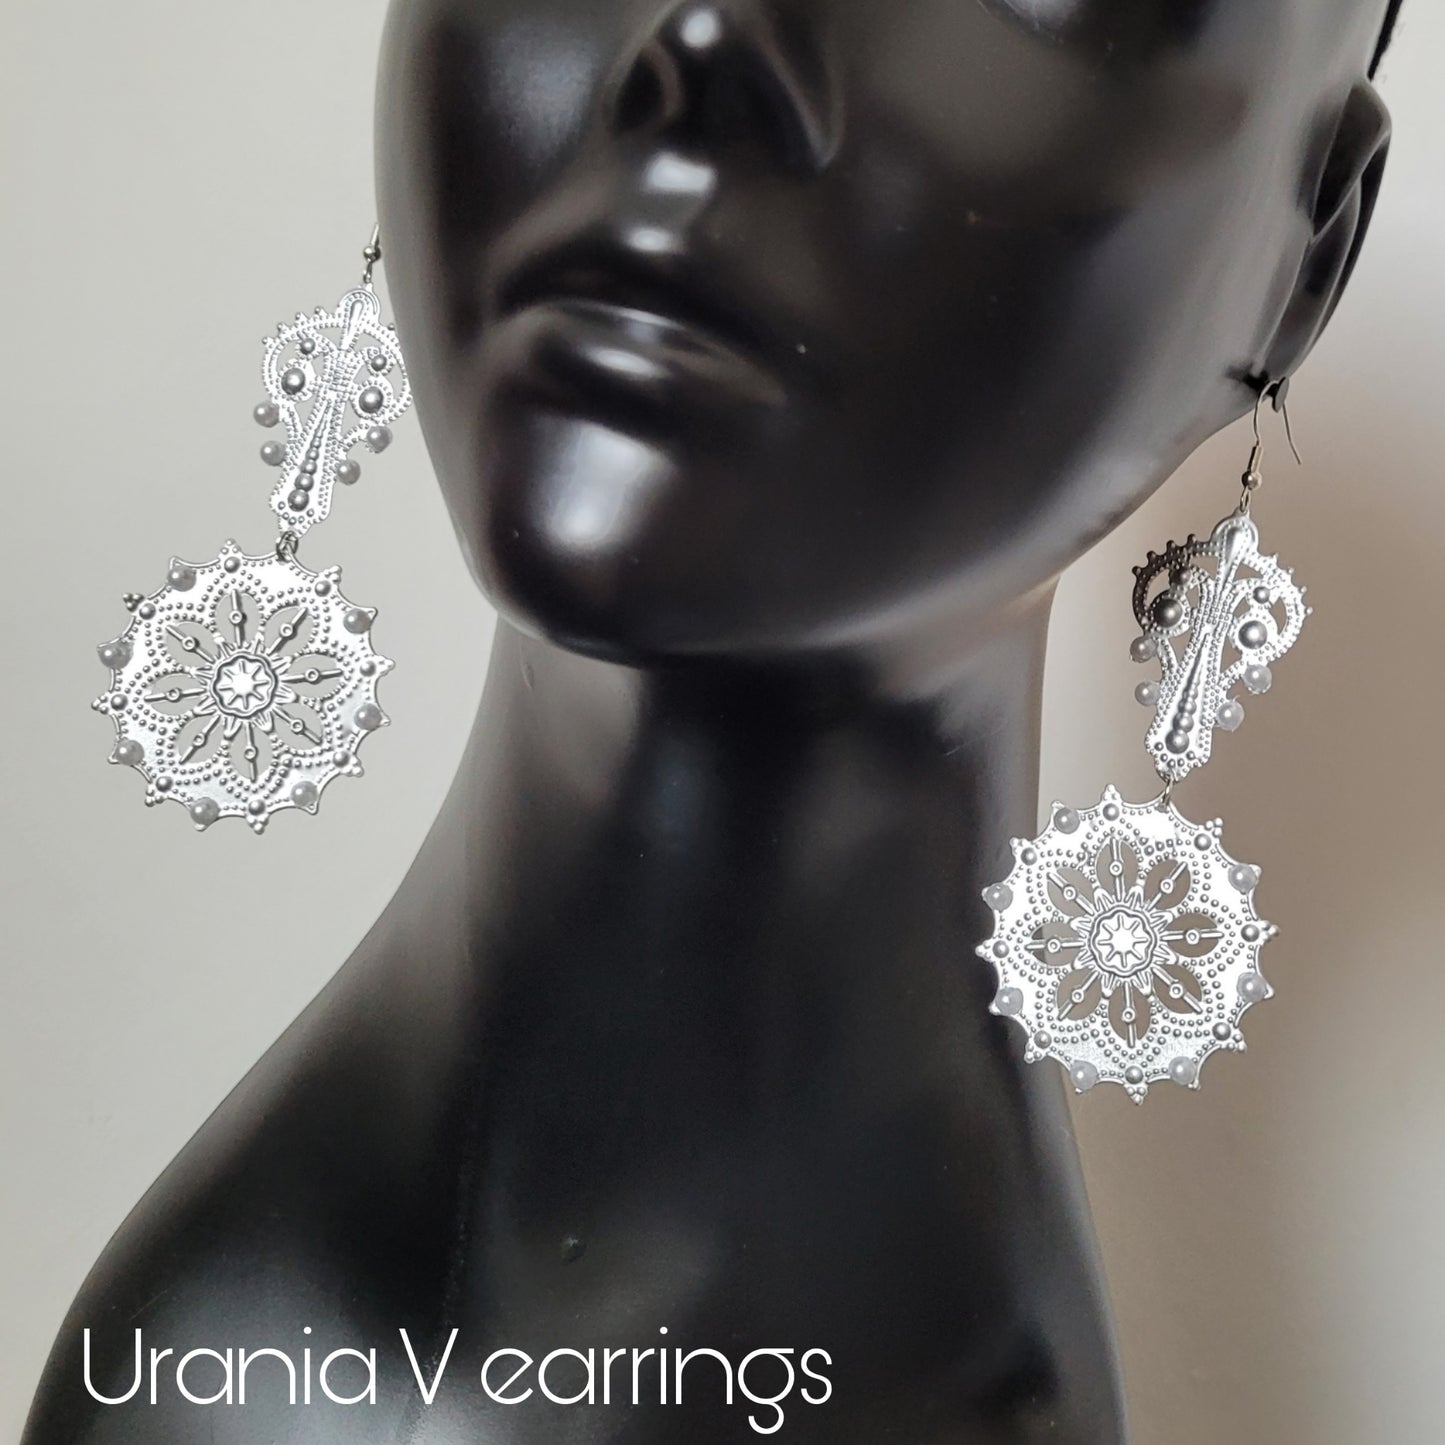 Deusa ex Machina collection: The Urania earrings